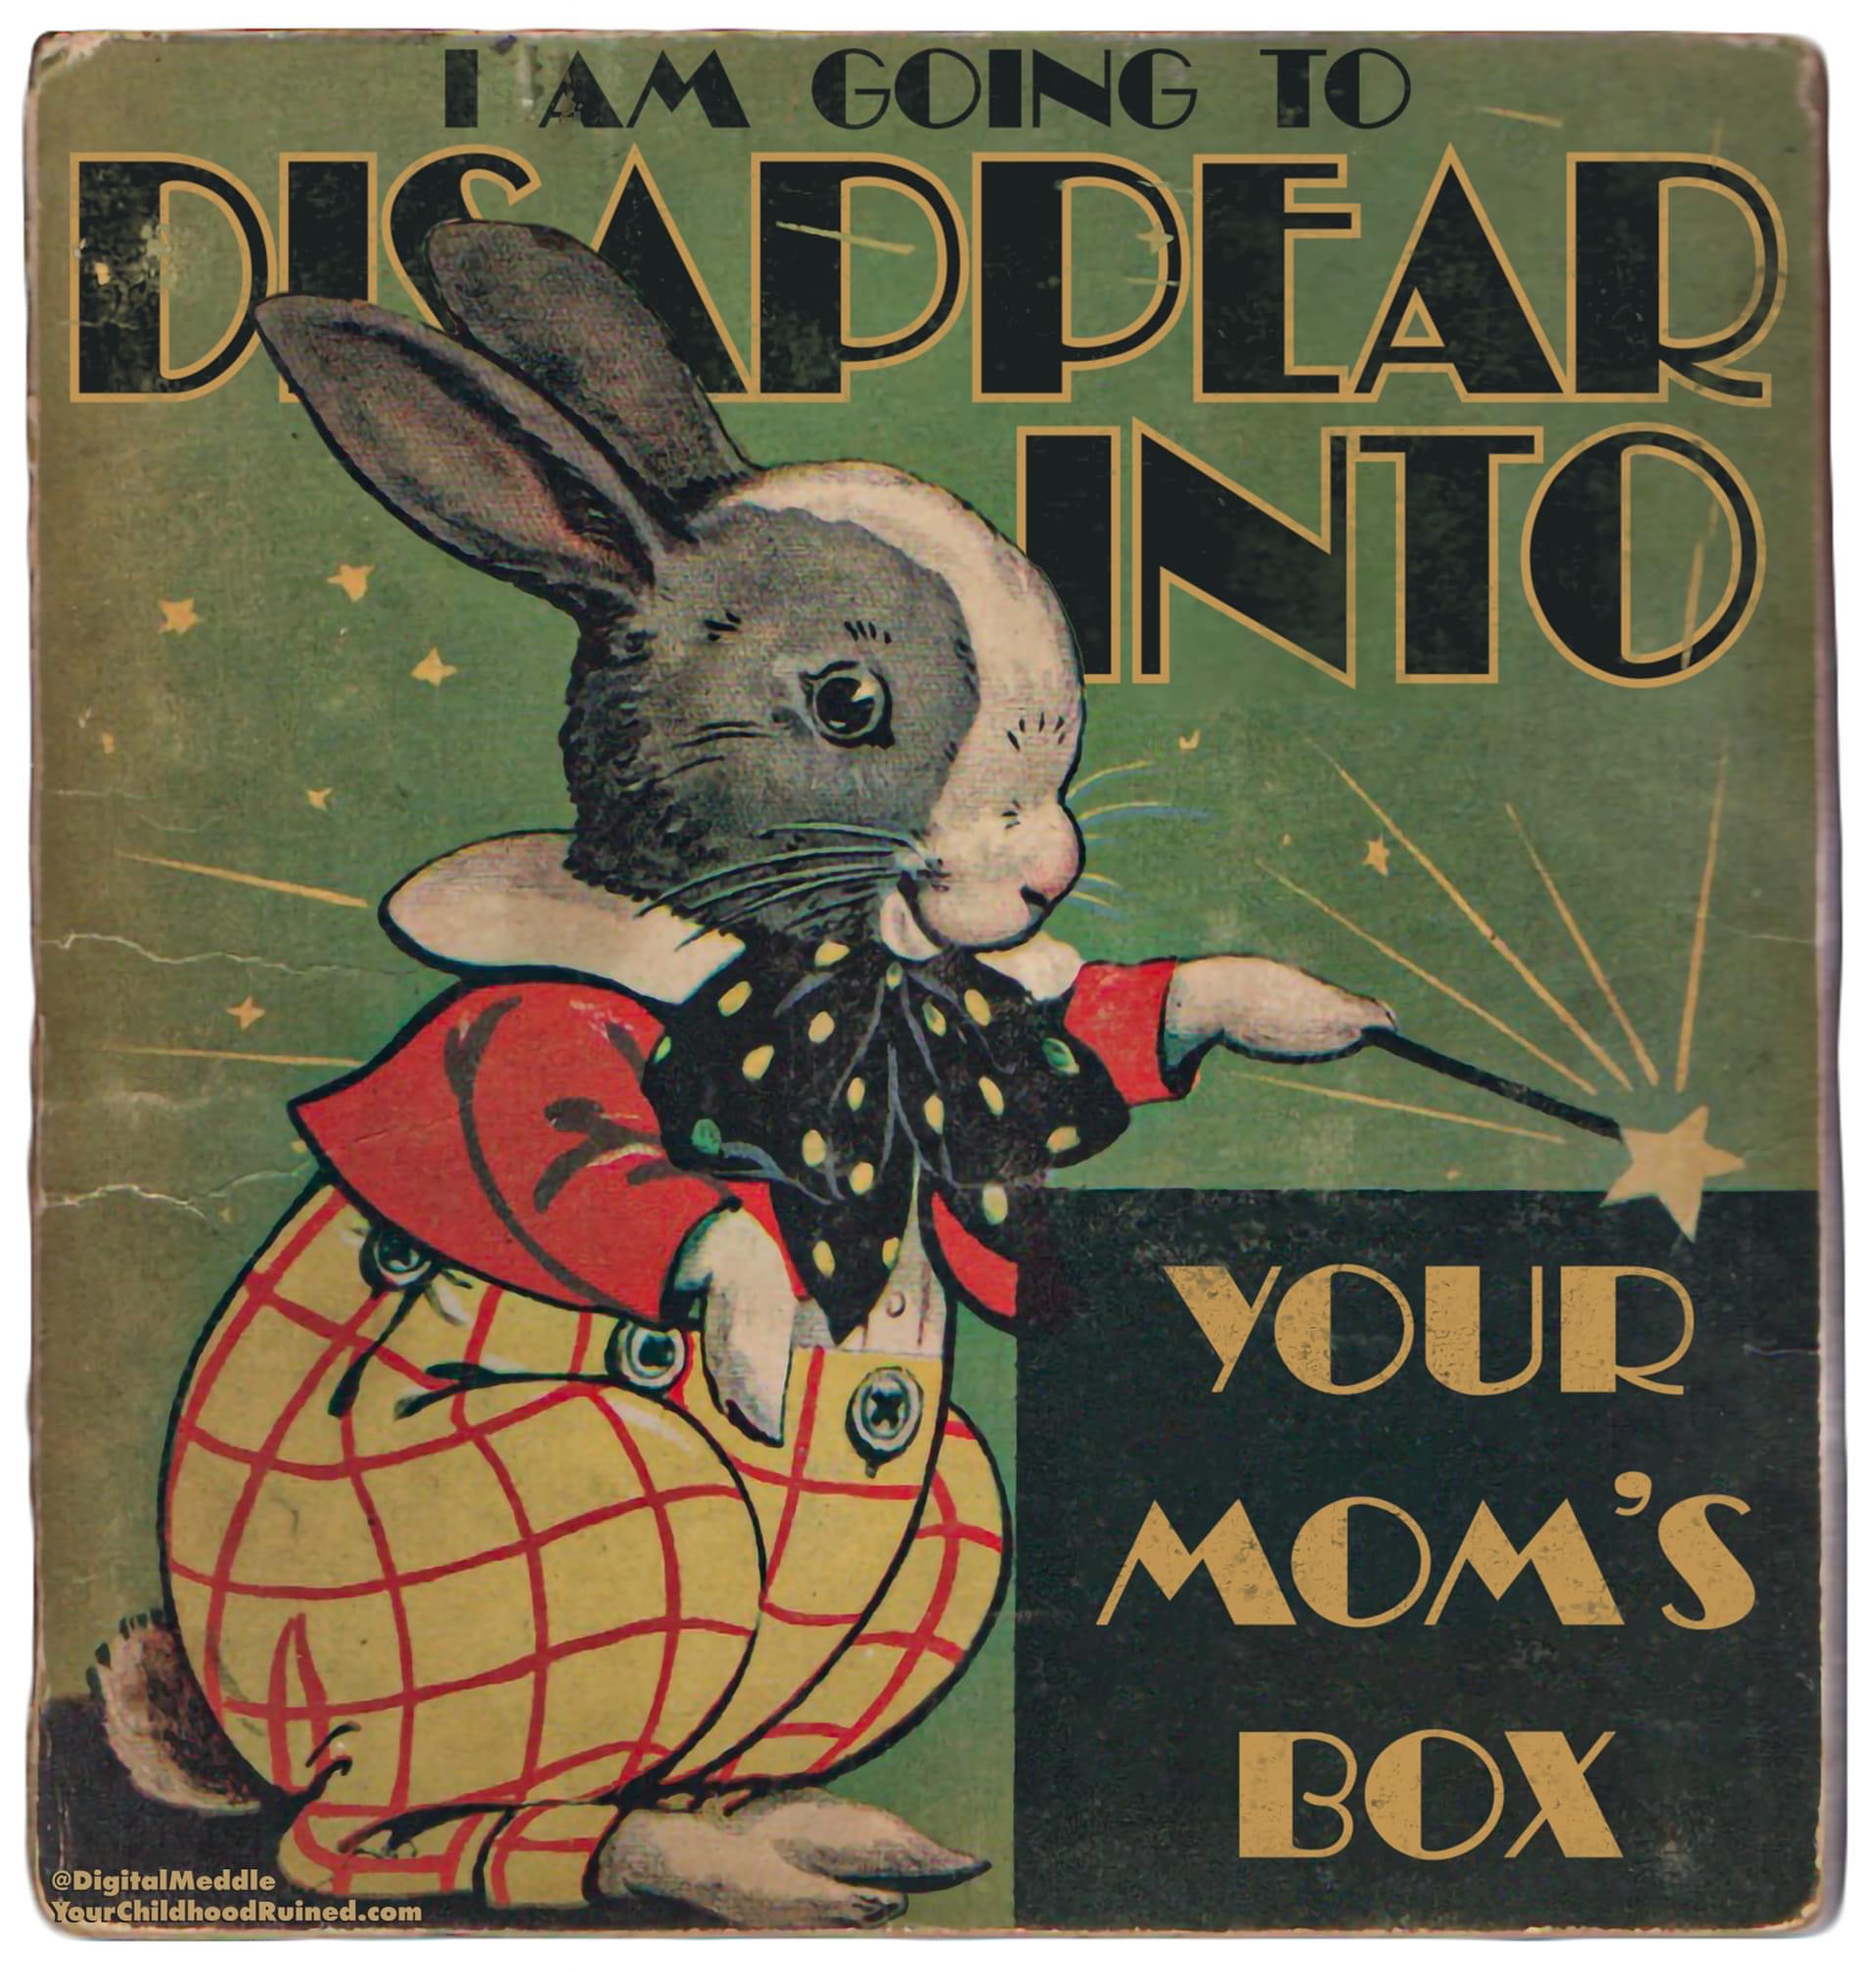 fauna - Tam Going To Dicappear Into a Your Mom'S Box e Digital Media four Childhoodulmed.com